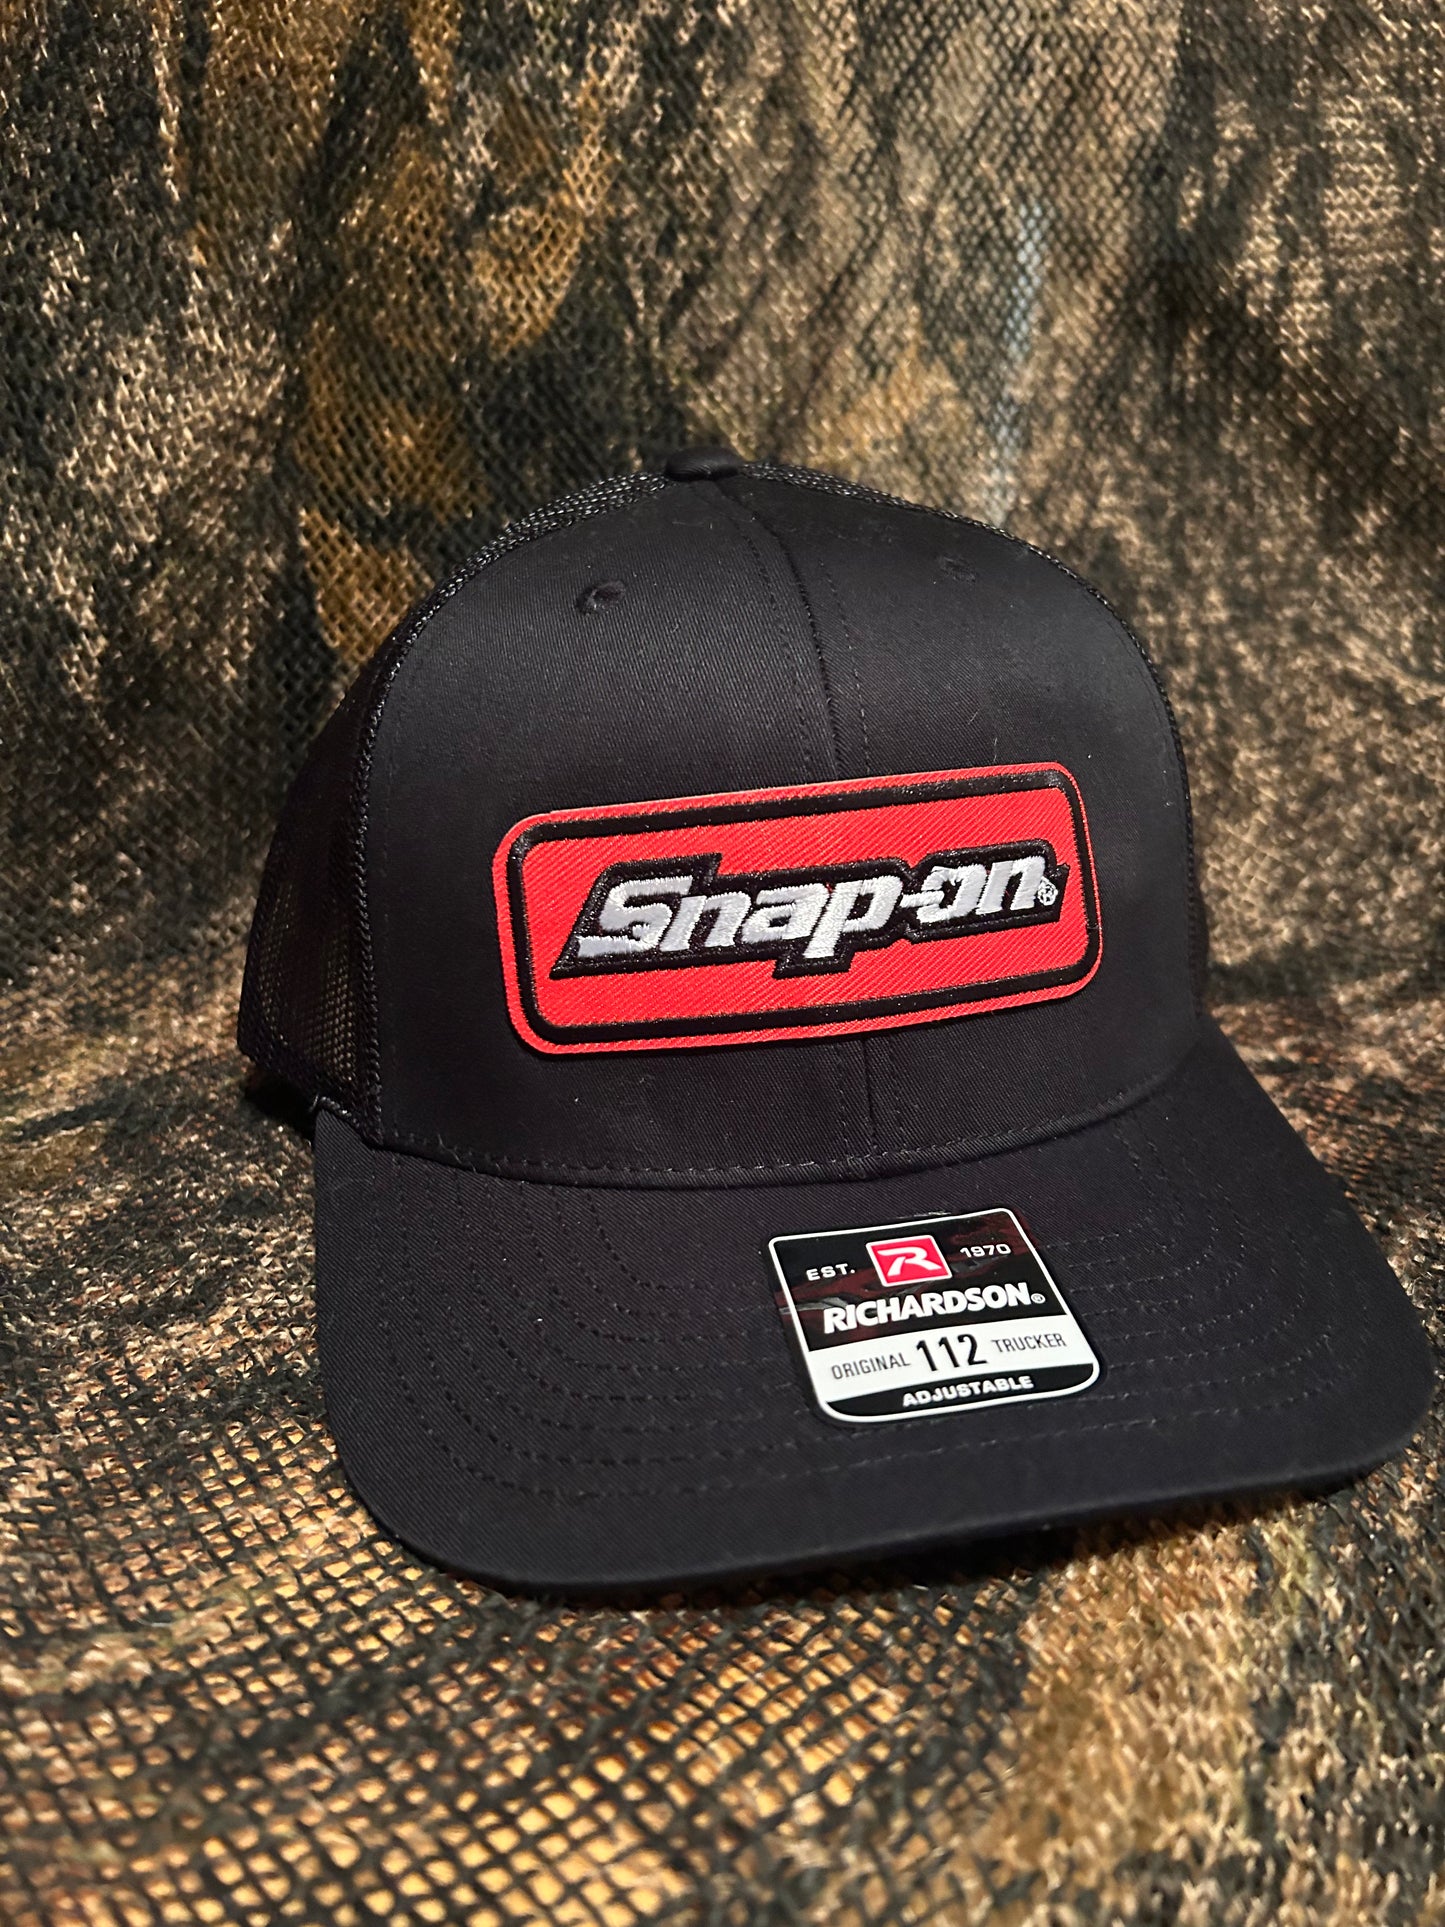 Snap-on tools Richardson 112 trucker hat